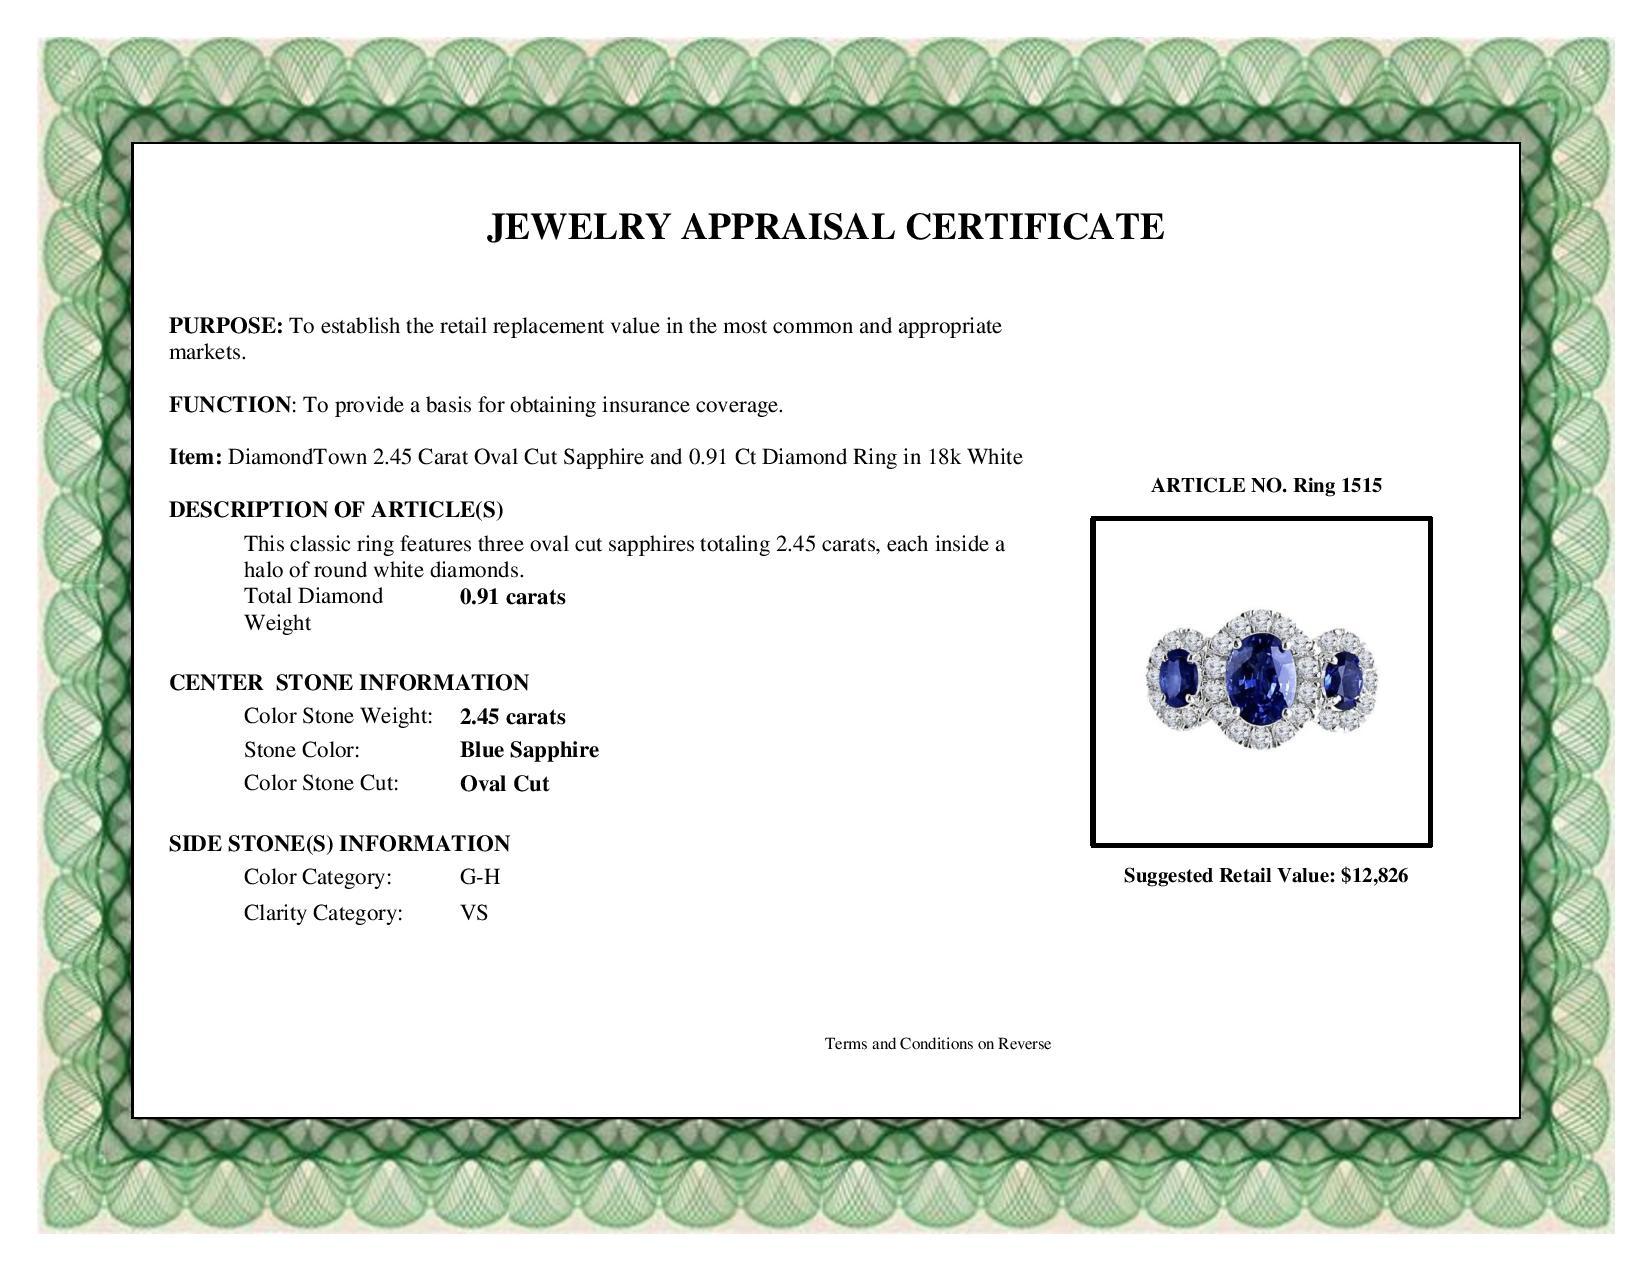 DiamondTown 2.45 Carat Oval Cut Sapphire and 0.91 Ct Diamond Ring in 18k White 1